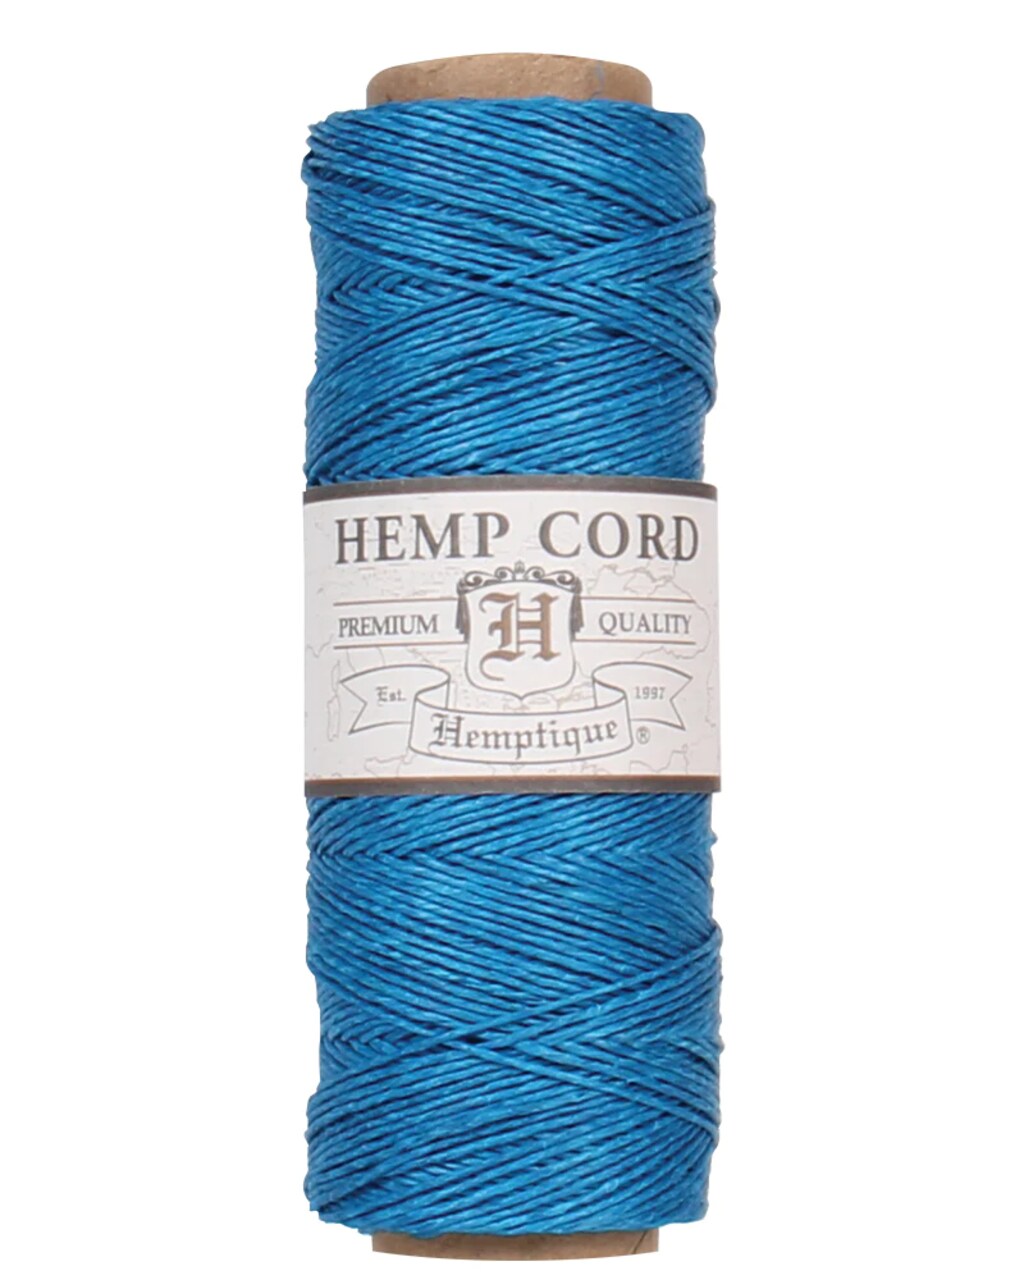 Hemptique 0.5mm #10 Hemp Cord Spools Jewelry Making Macrame Crochet  Crafting Gift Wrapping Outdoor Gardening